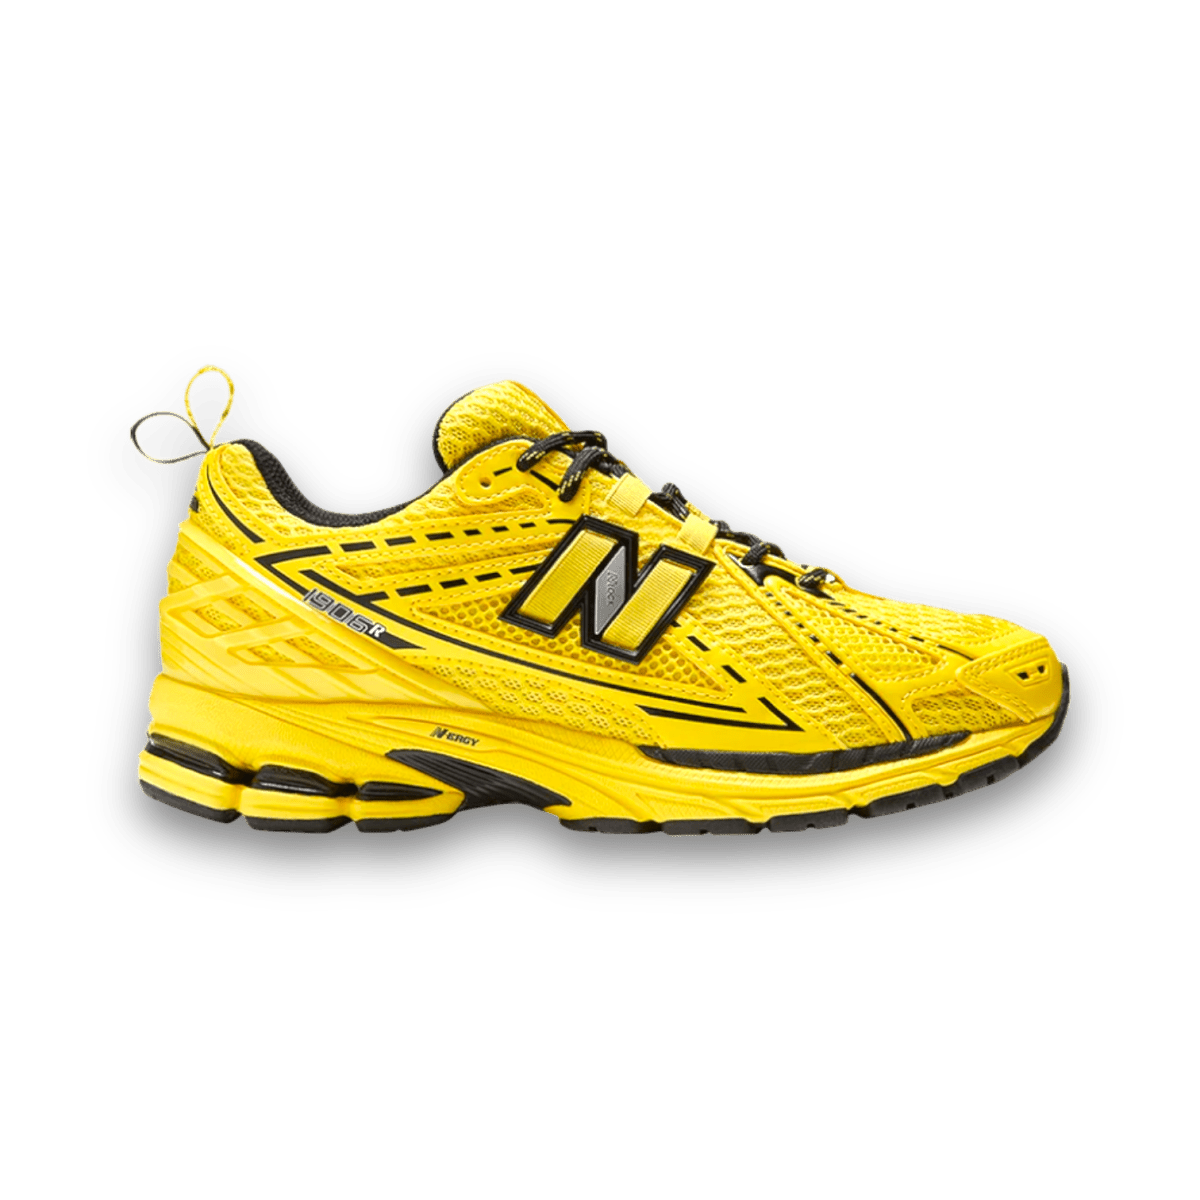 New Balance GANNI x 1906R 'Blazing Yellow' - Grade School - sneaker - Low Sneaker - New Balance - Jawns on Fire